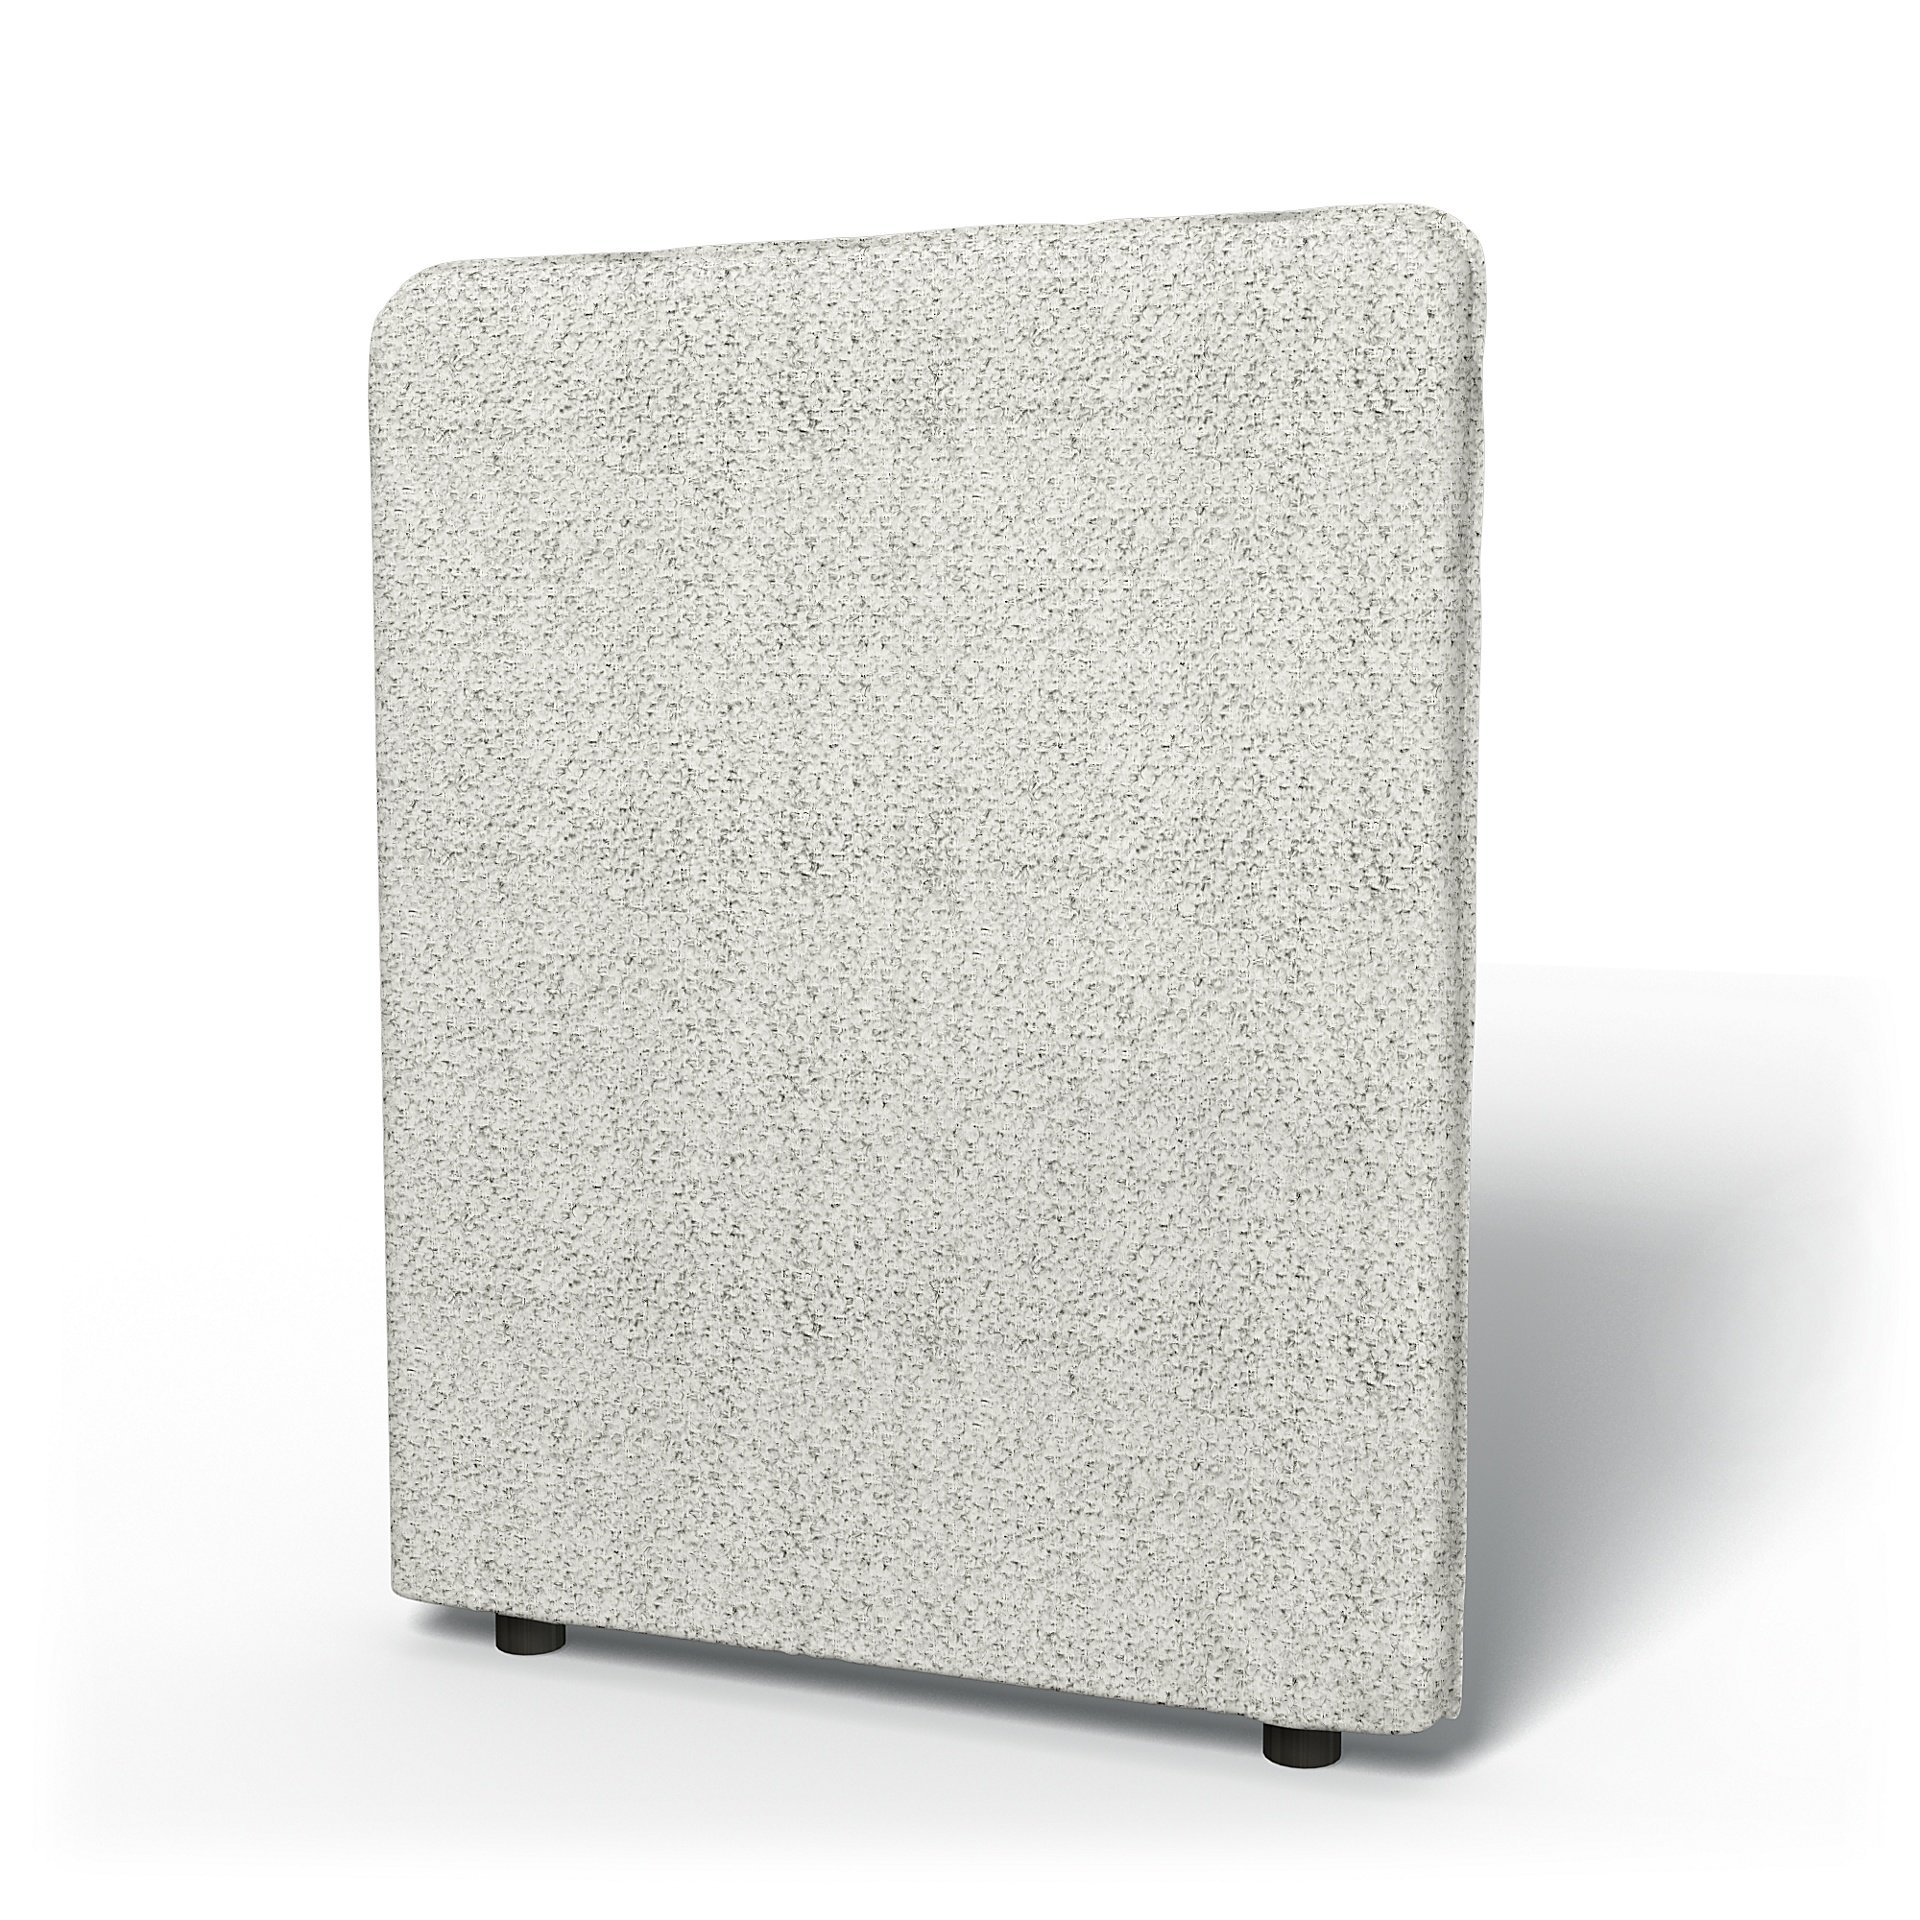 IKEA - Vallentuna High Backrest Cover 80x100cm 32x39in, Ivory, Boucle & Texture - Bemz